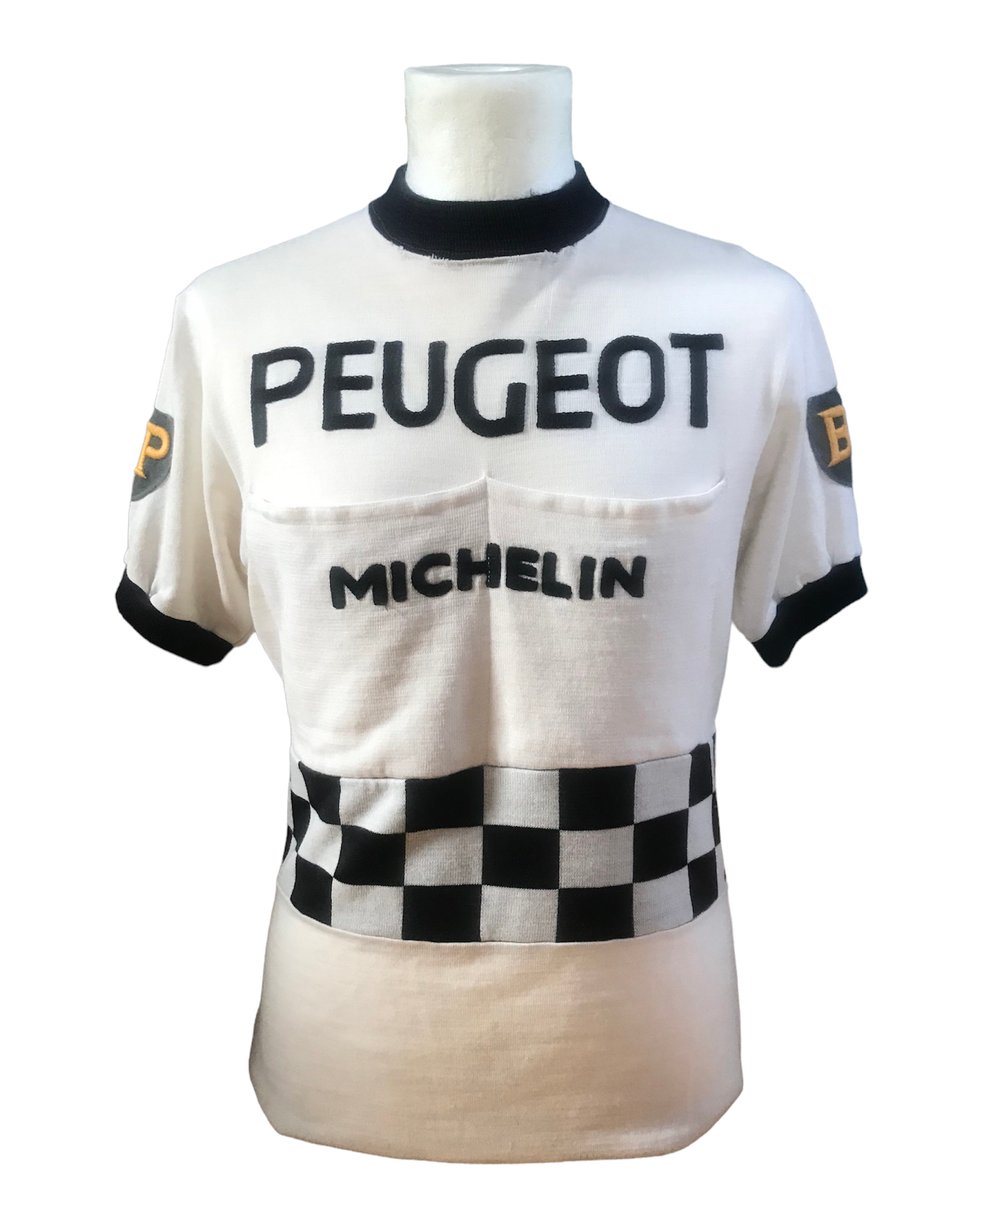 1971 -  Peugeot BP Michelin 